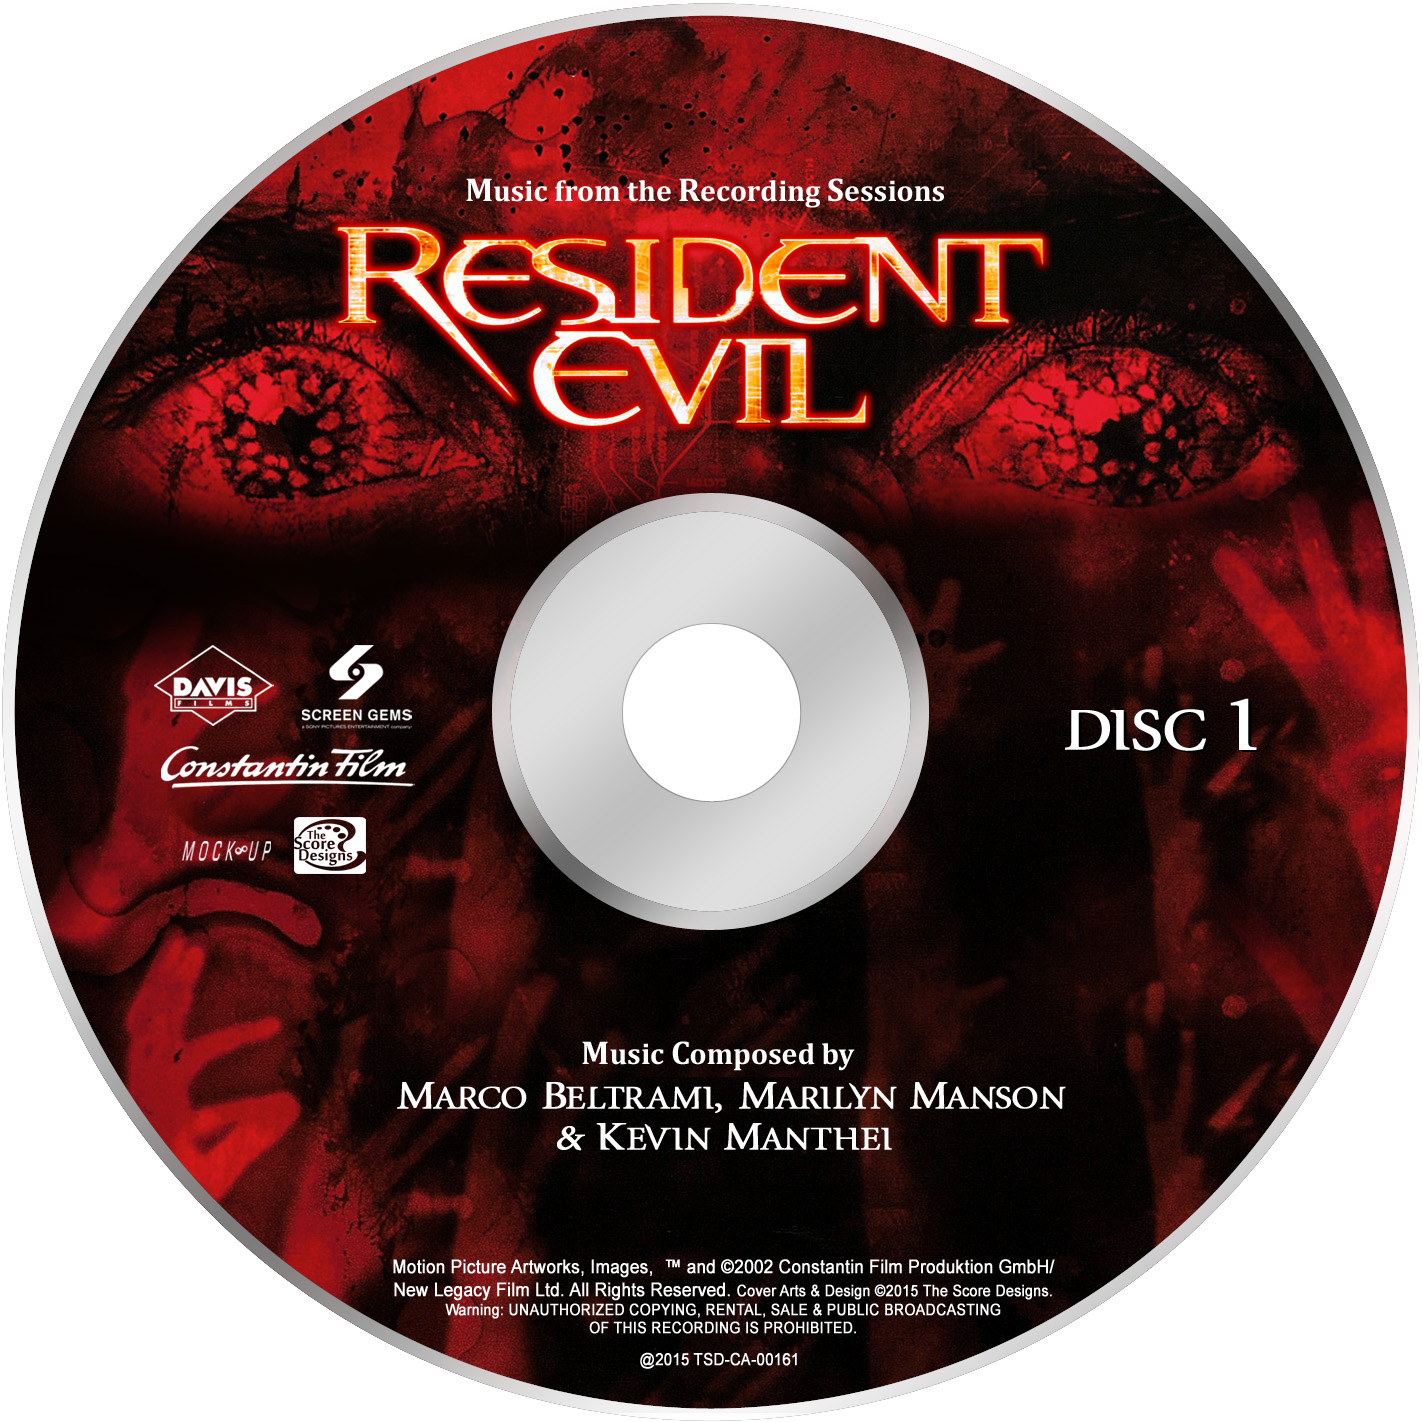 Resident evil саундтреки